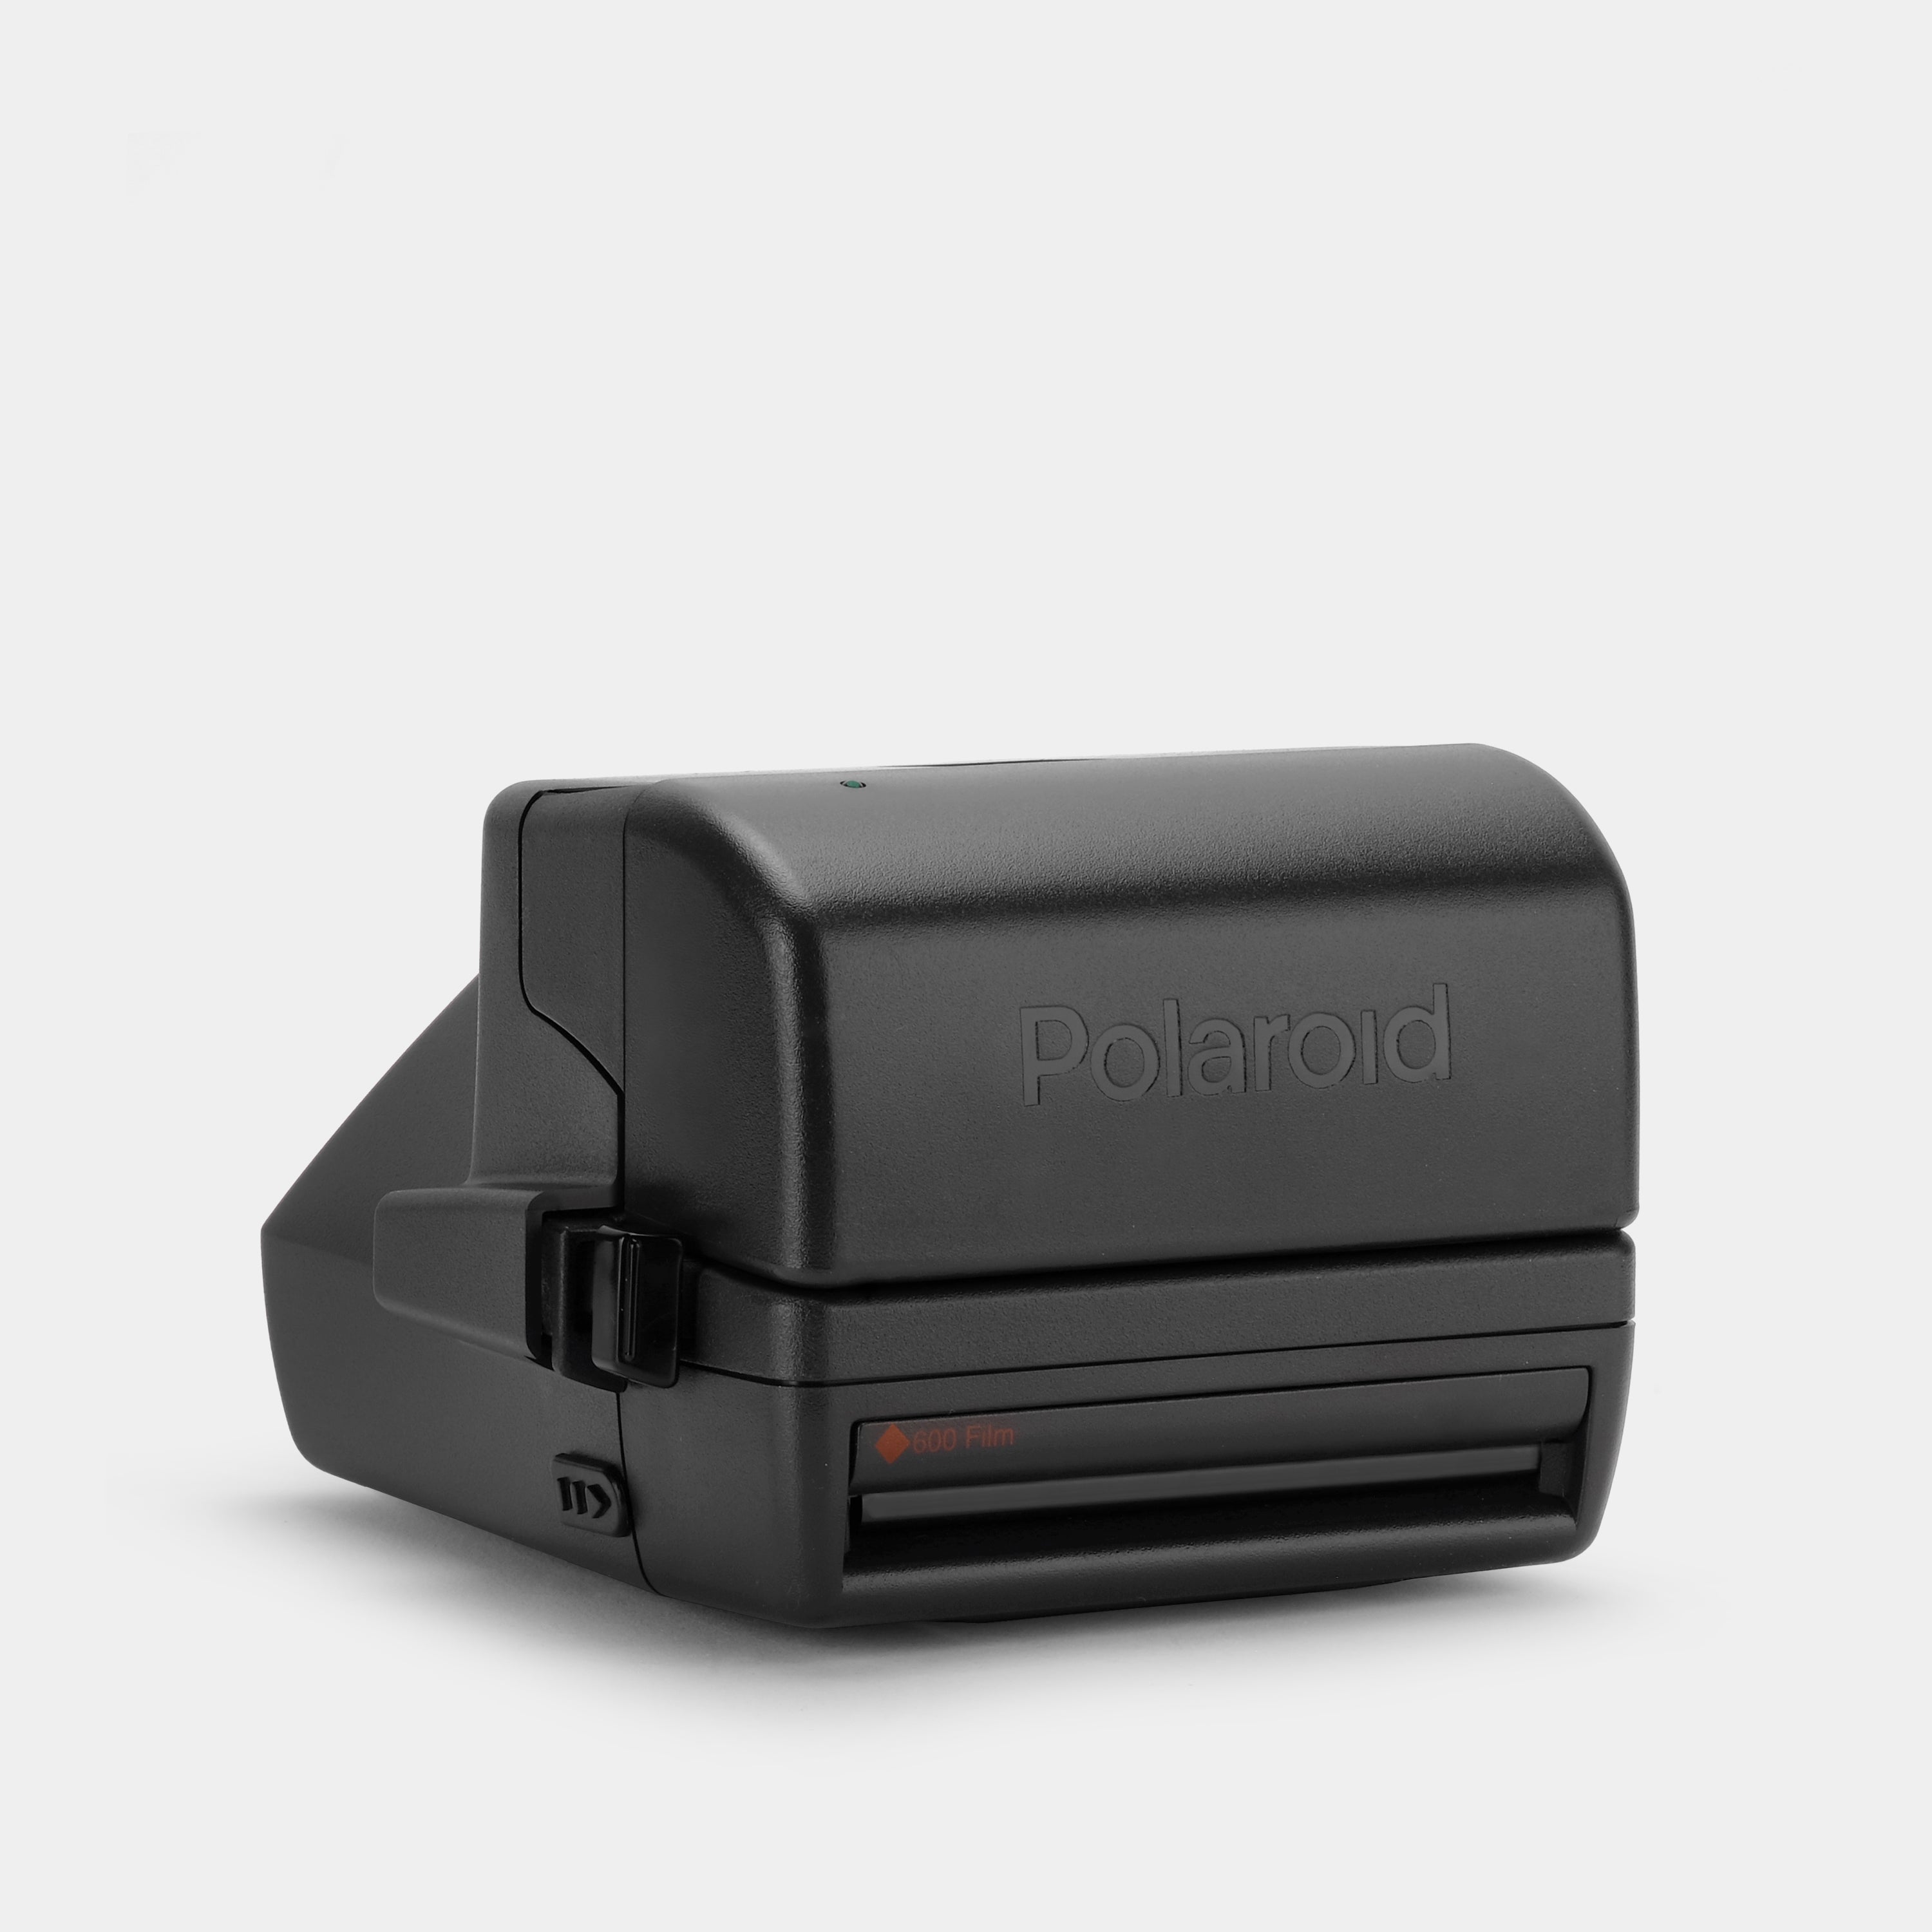 Polaroid 600 One Step Instant Film Camera